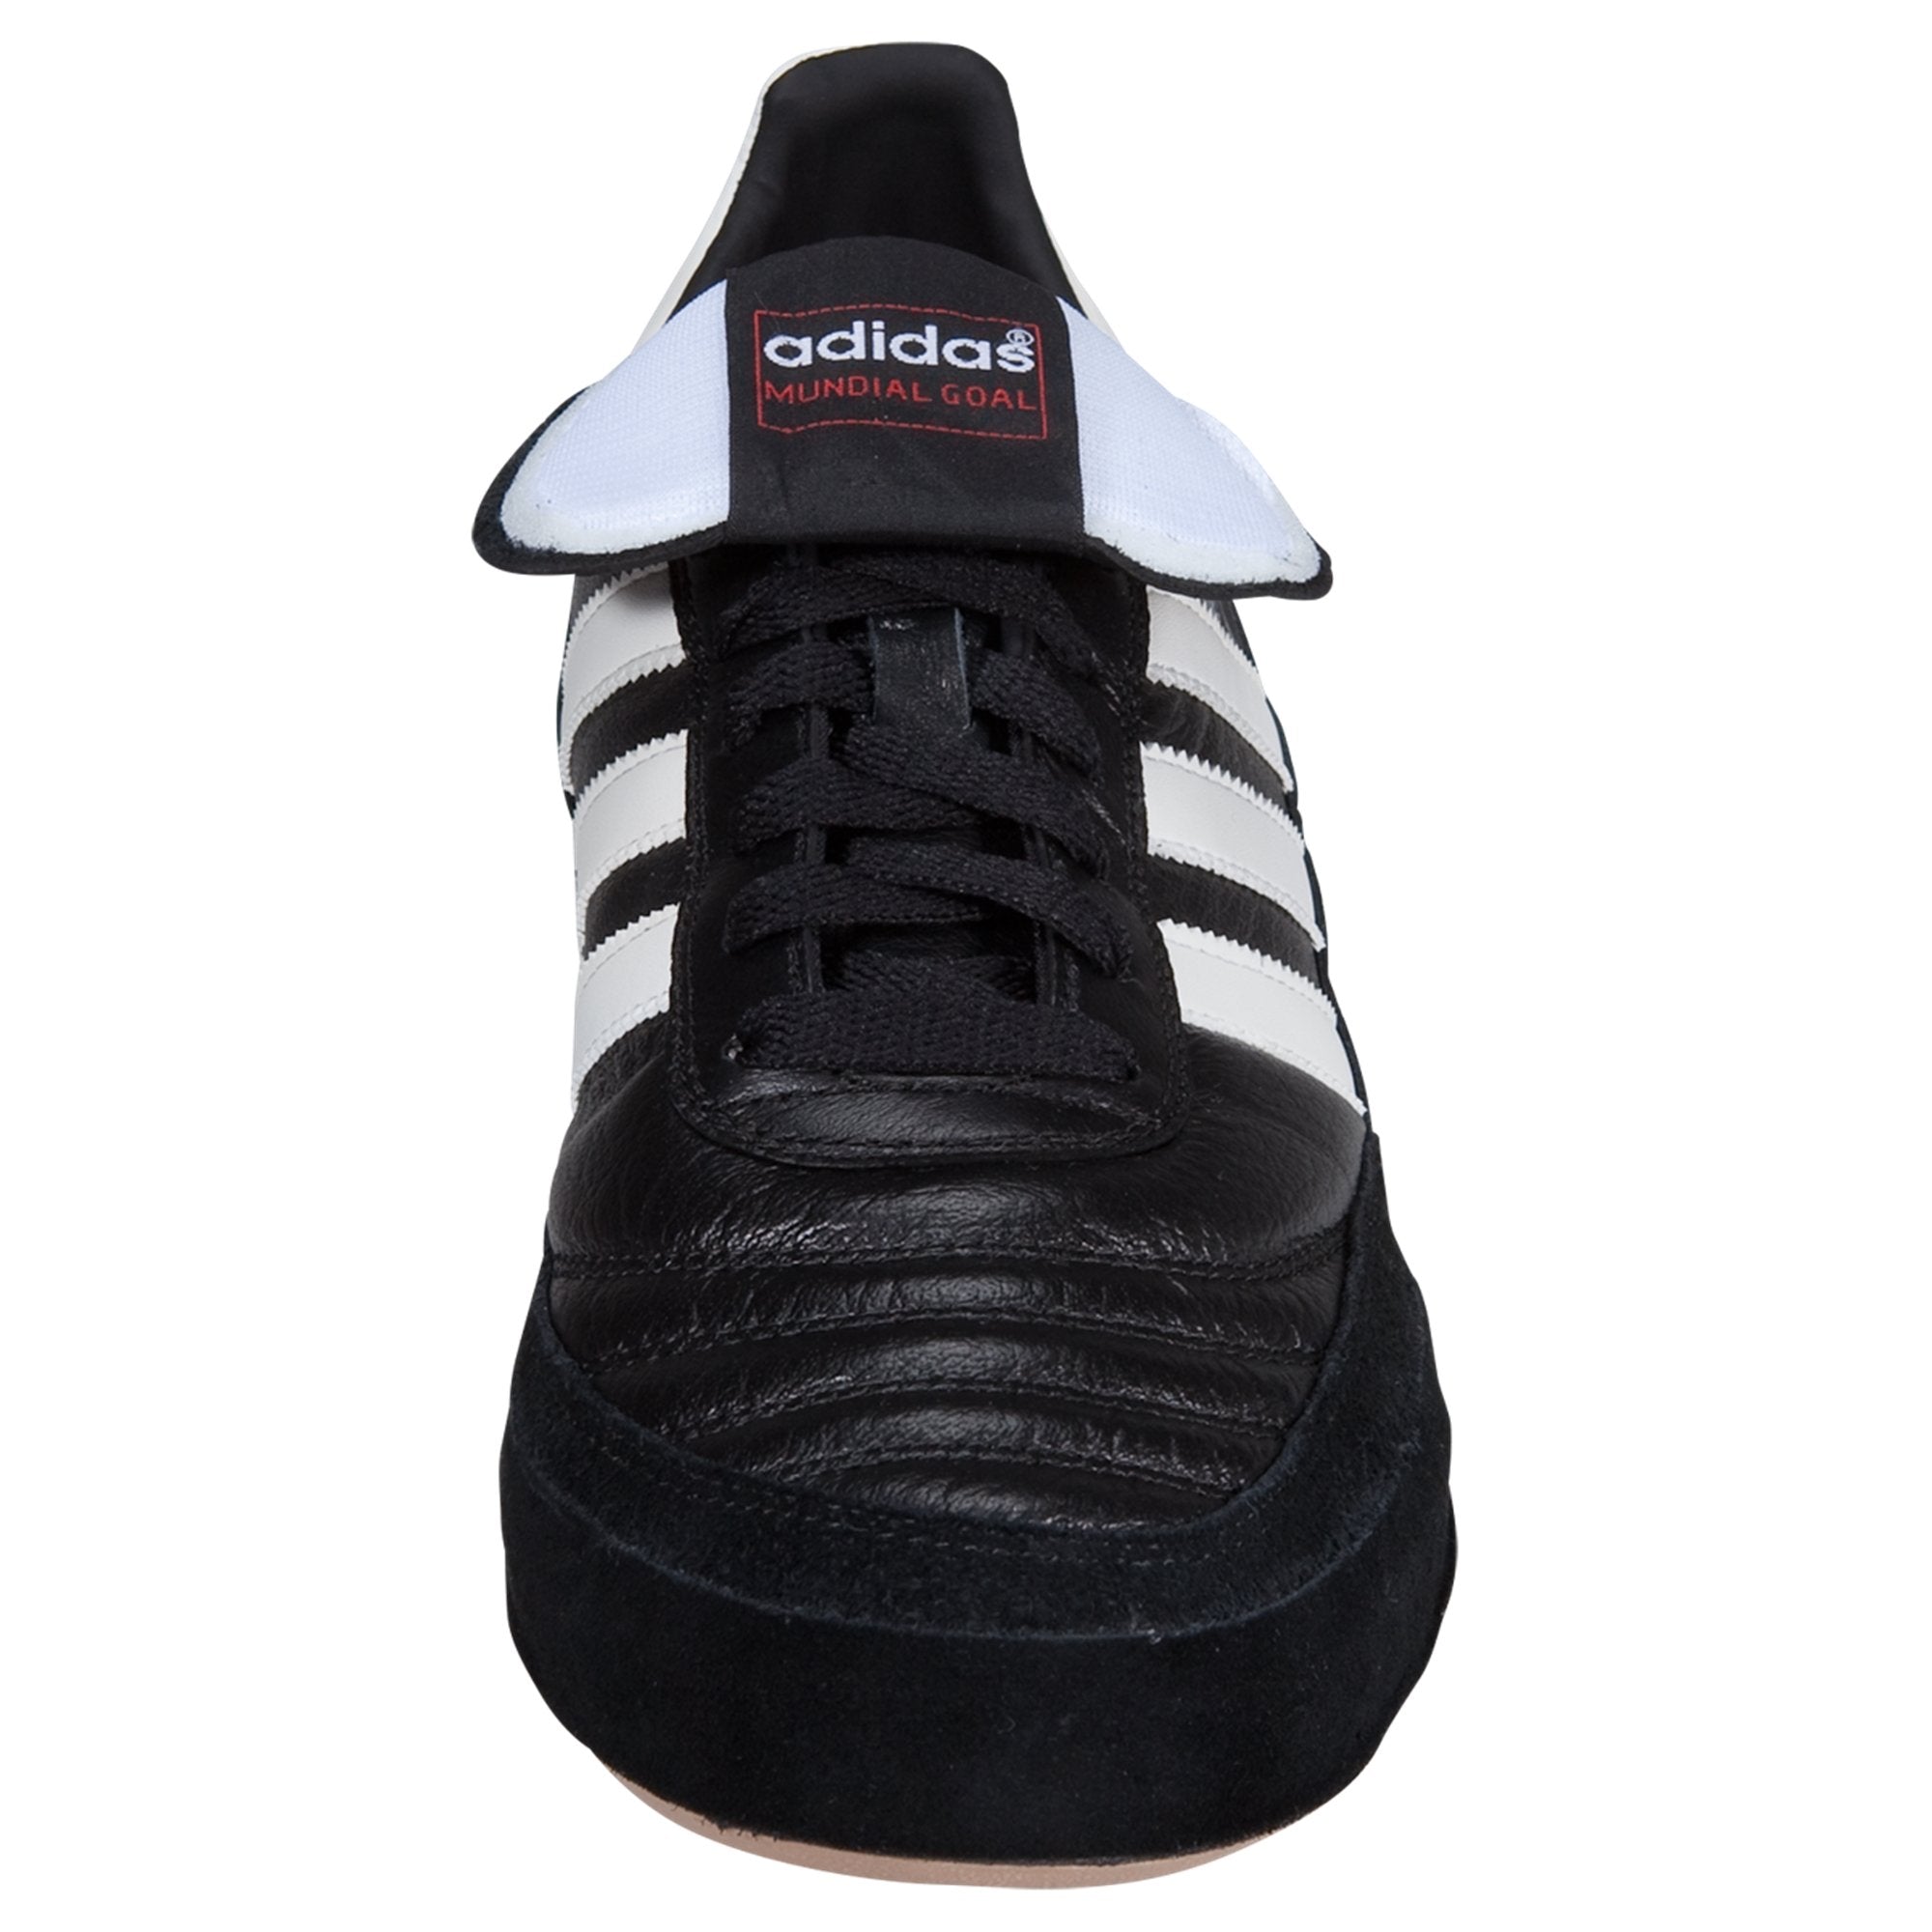 triple En todo el mundo Hambre adidas Mundial Goal Indoor Soccer Shoe - Black/White 019310 – Soccer Zone  USA